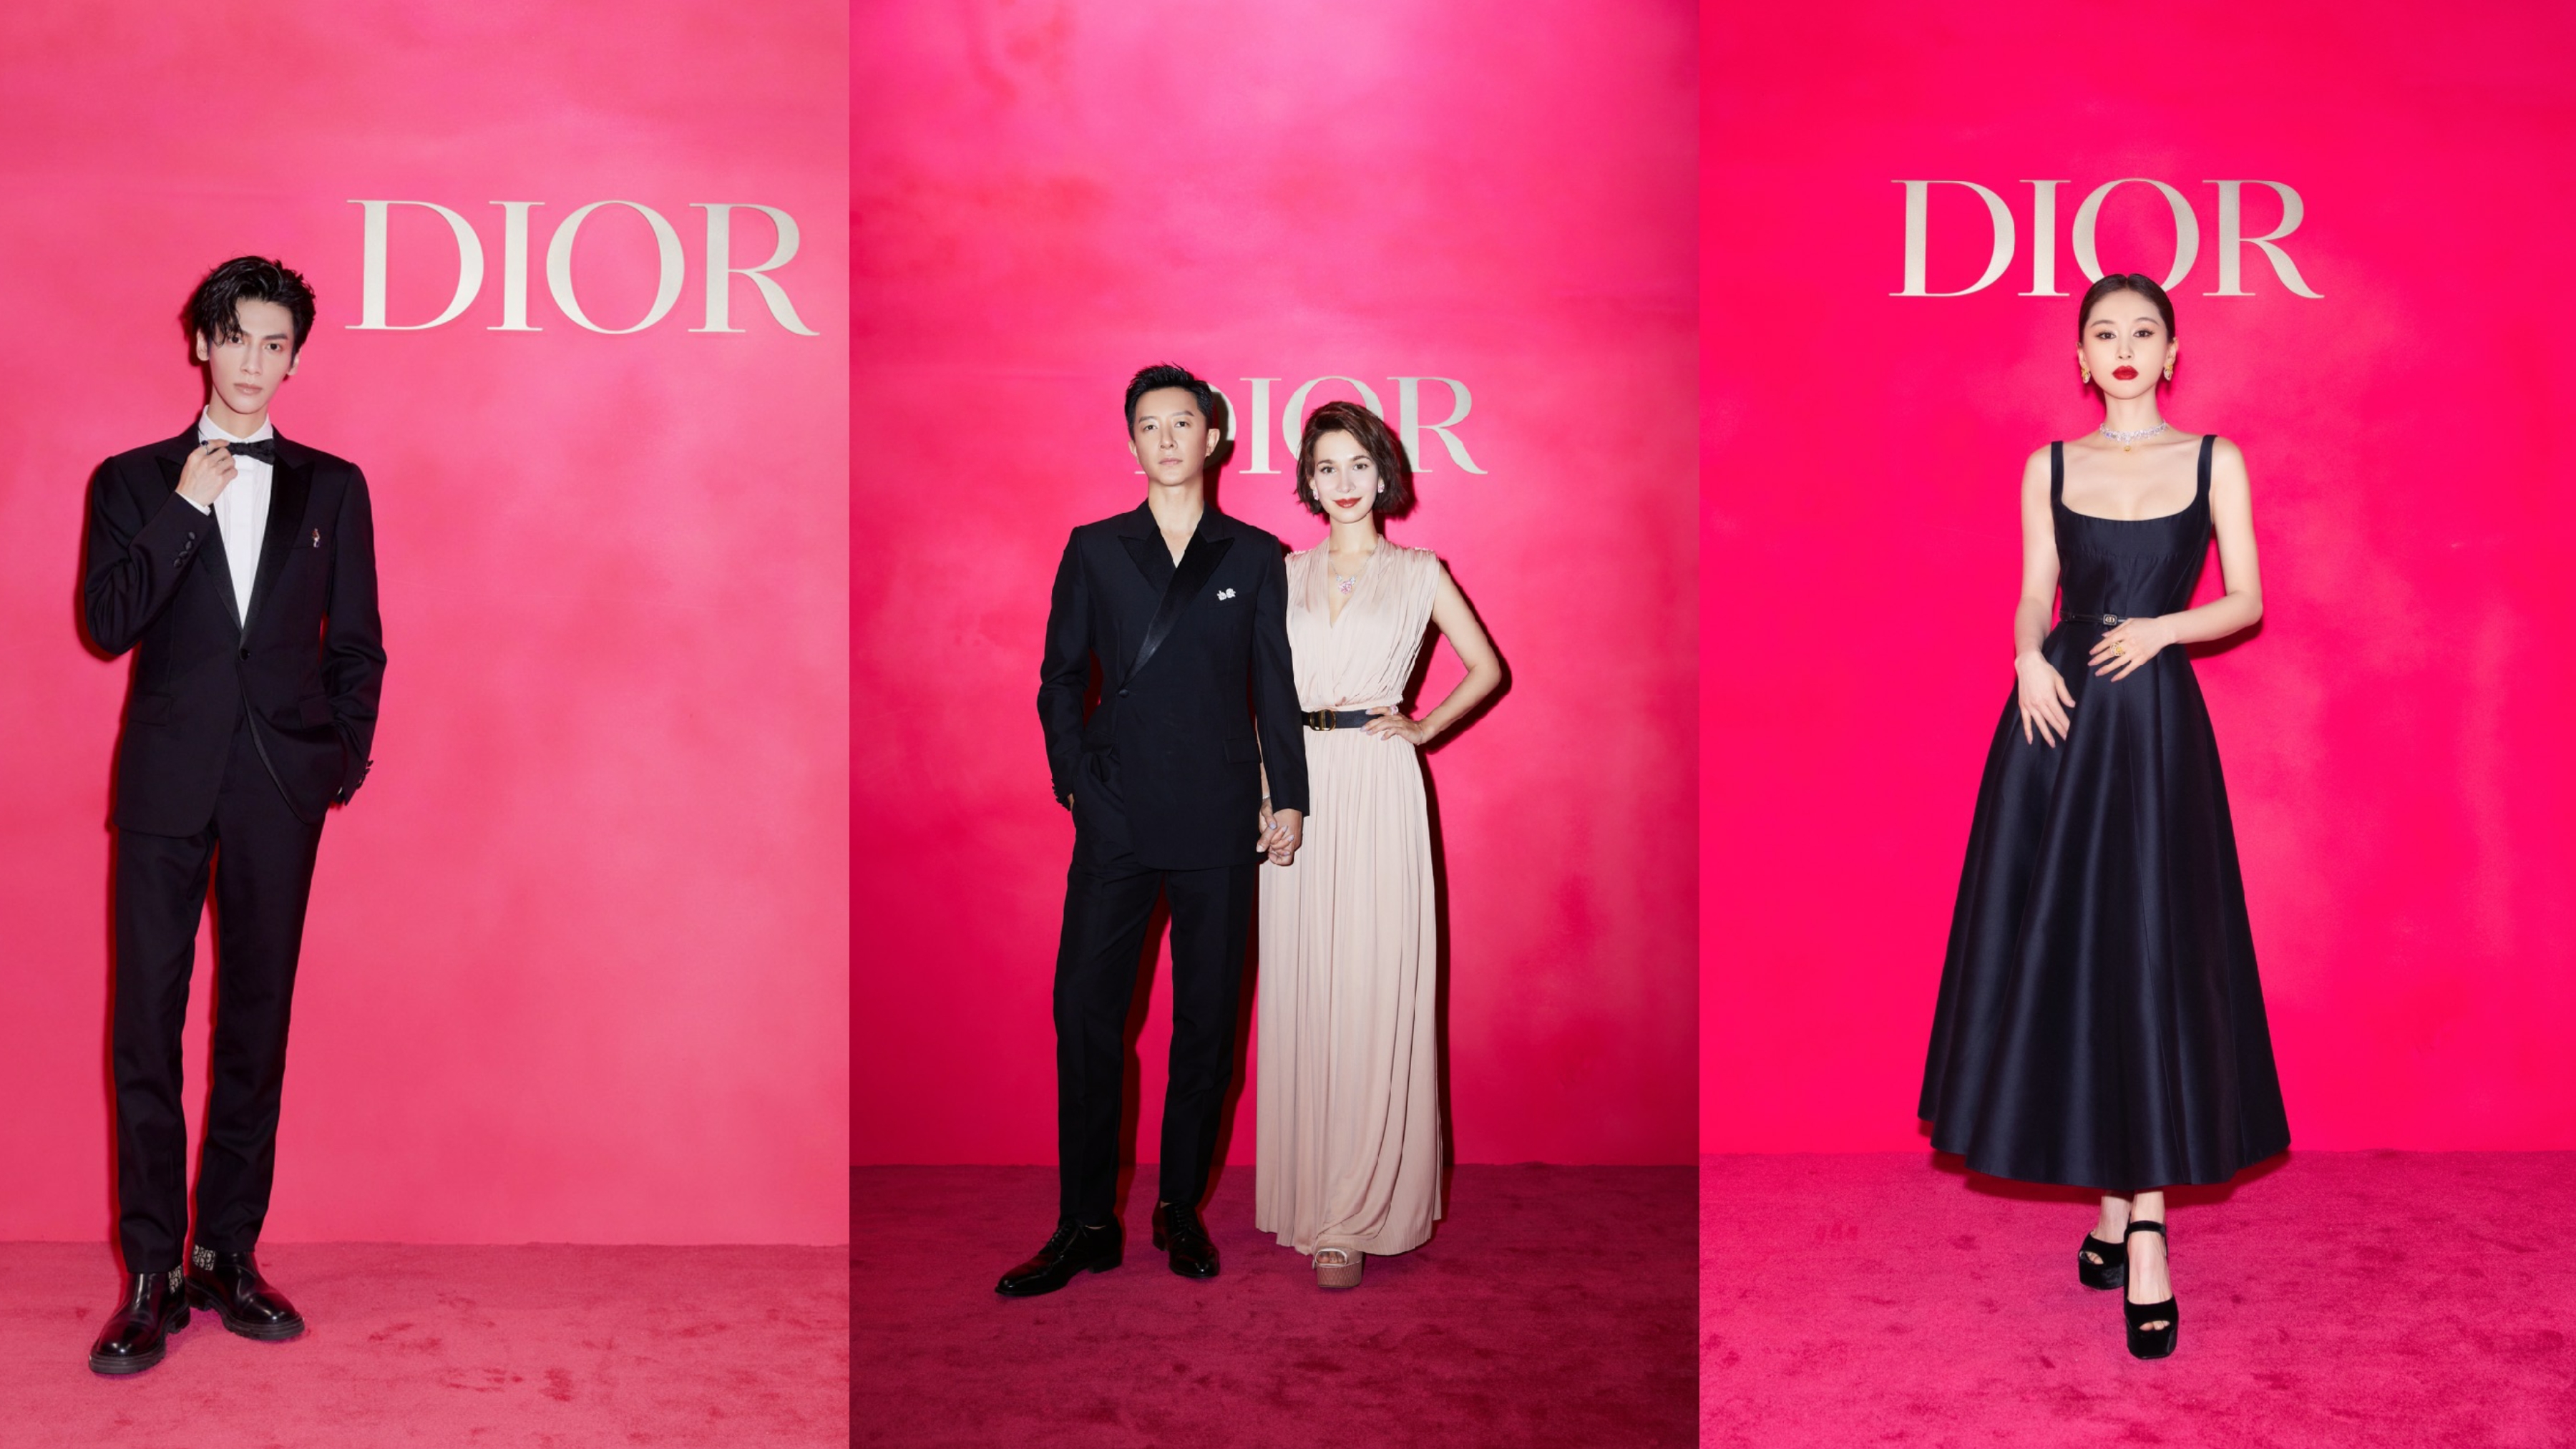 dior rose 高级珠宝系列于成都盛大发布